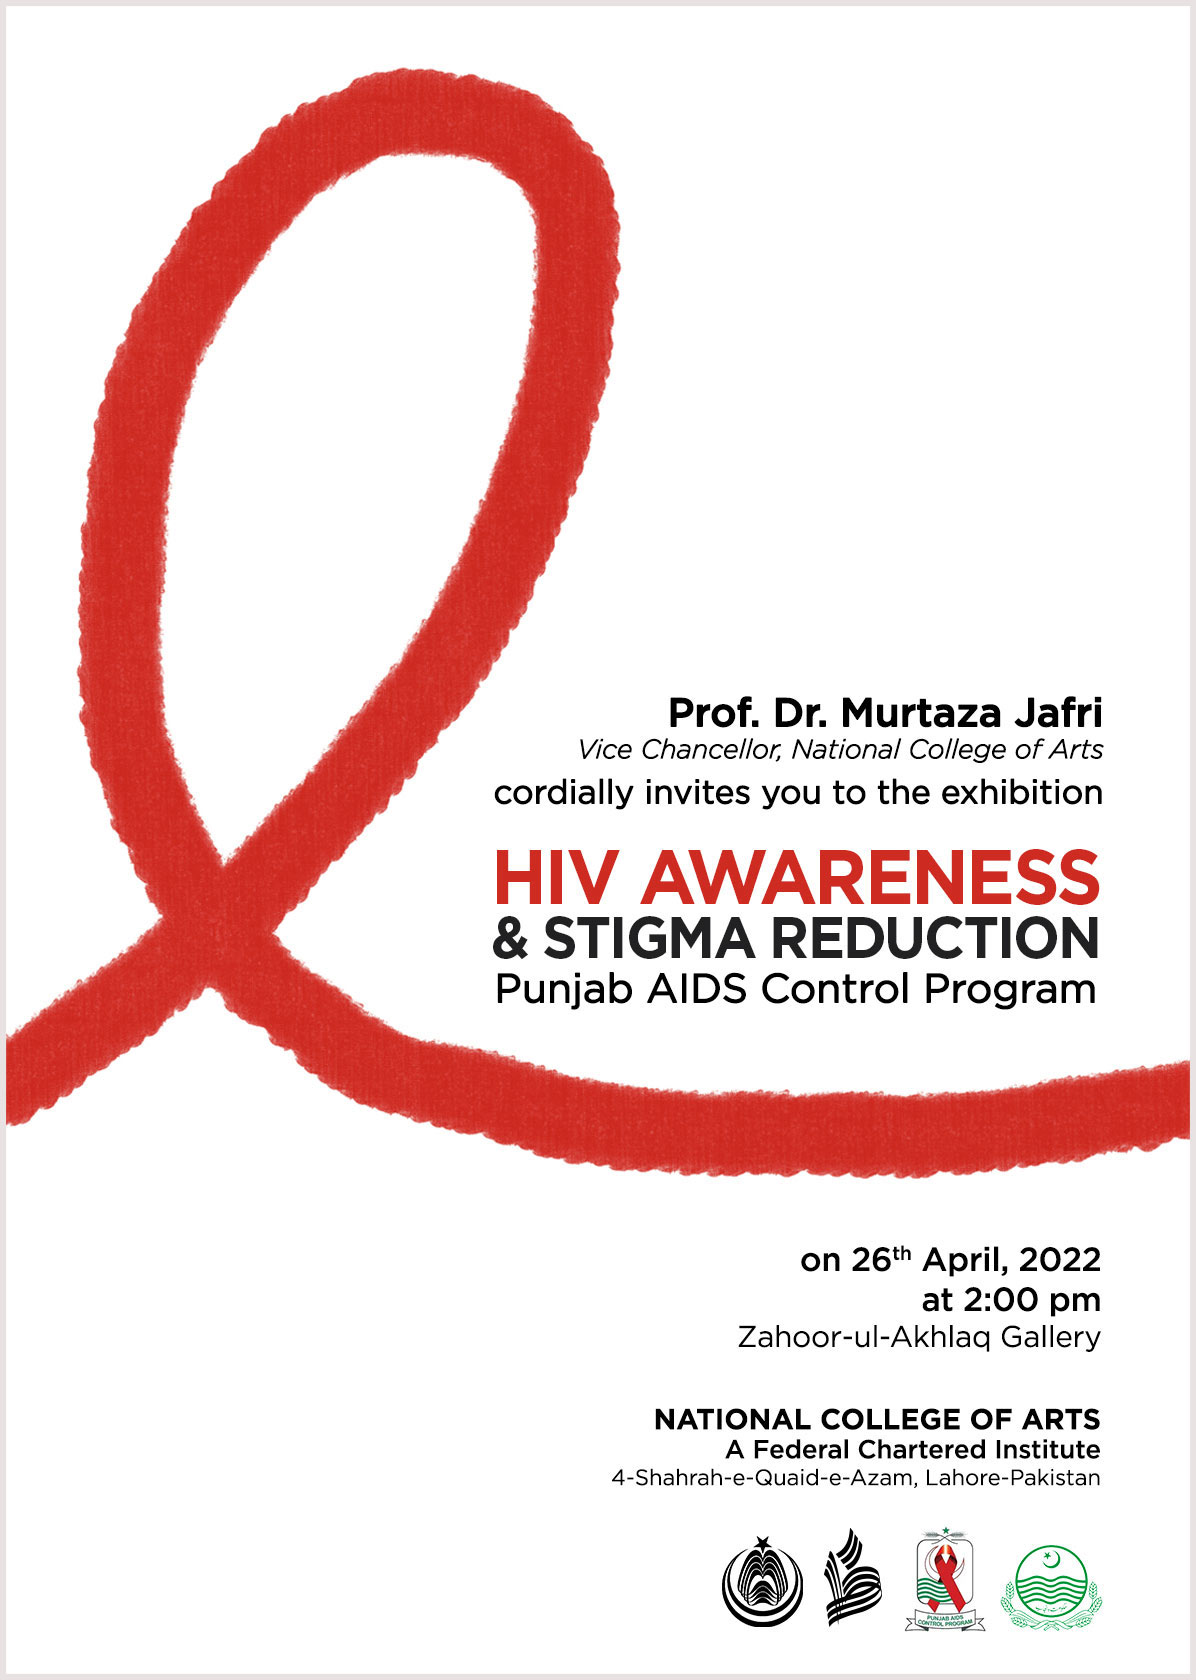 HIV AWARENESS & STIGMA REDUCTION